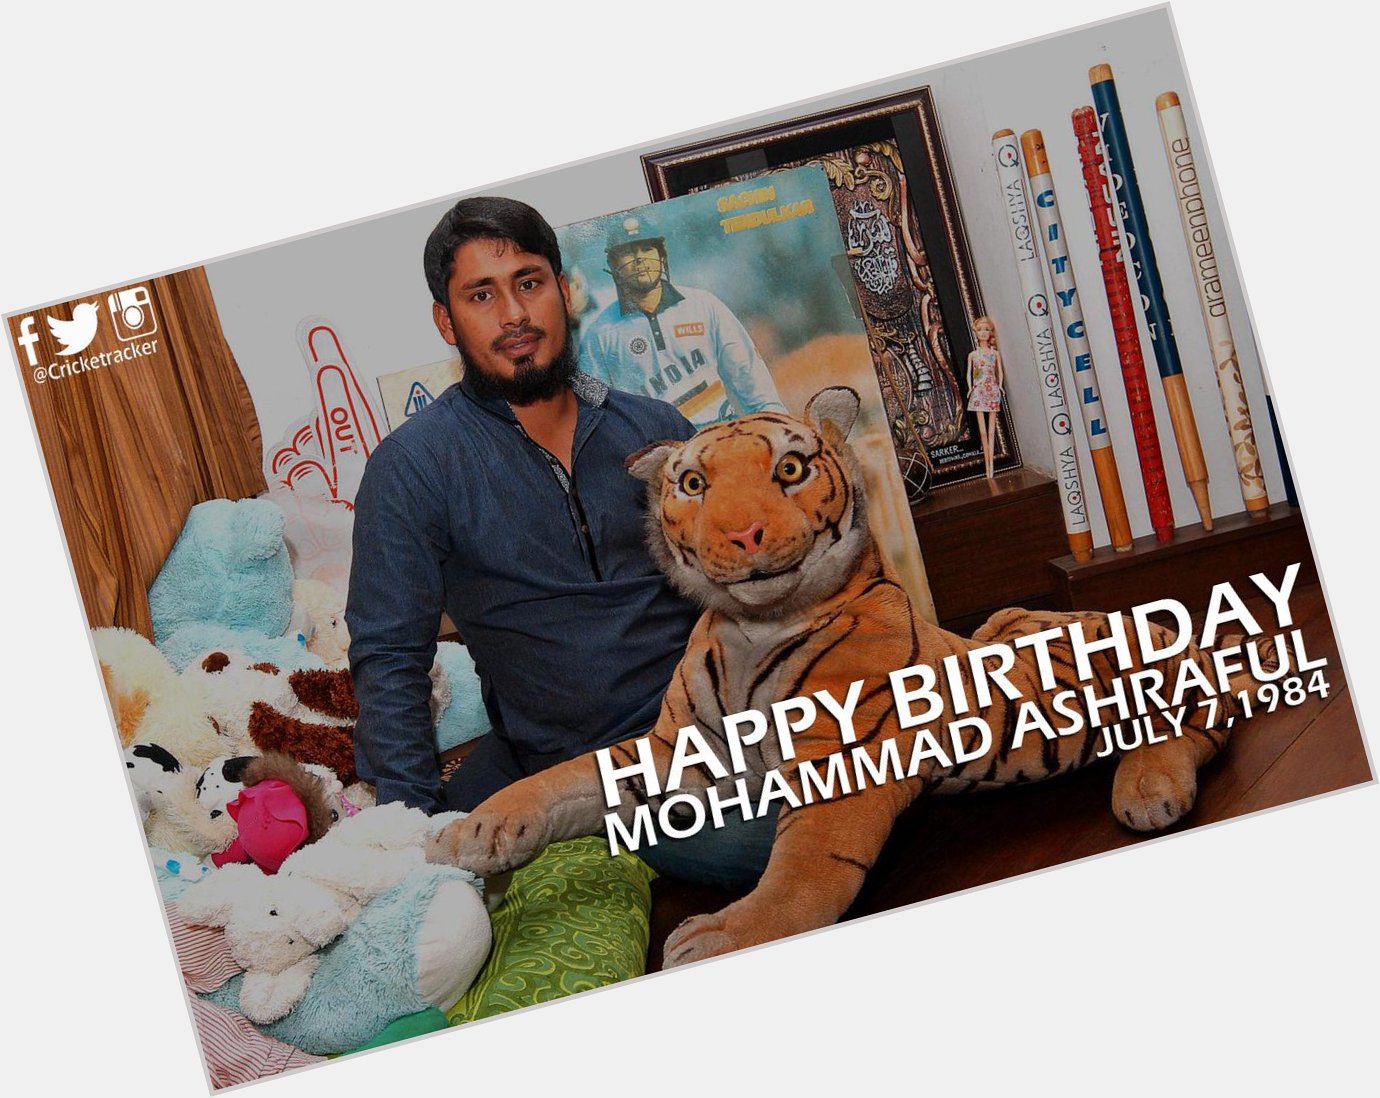 Happy Birthday Mohammad Ashraful\. He turns 31 today. 